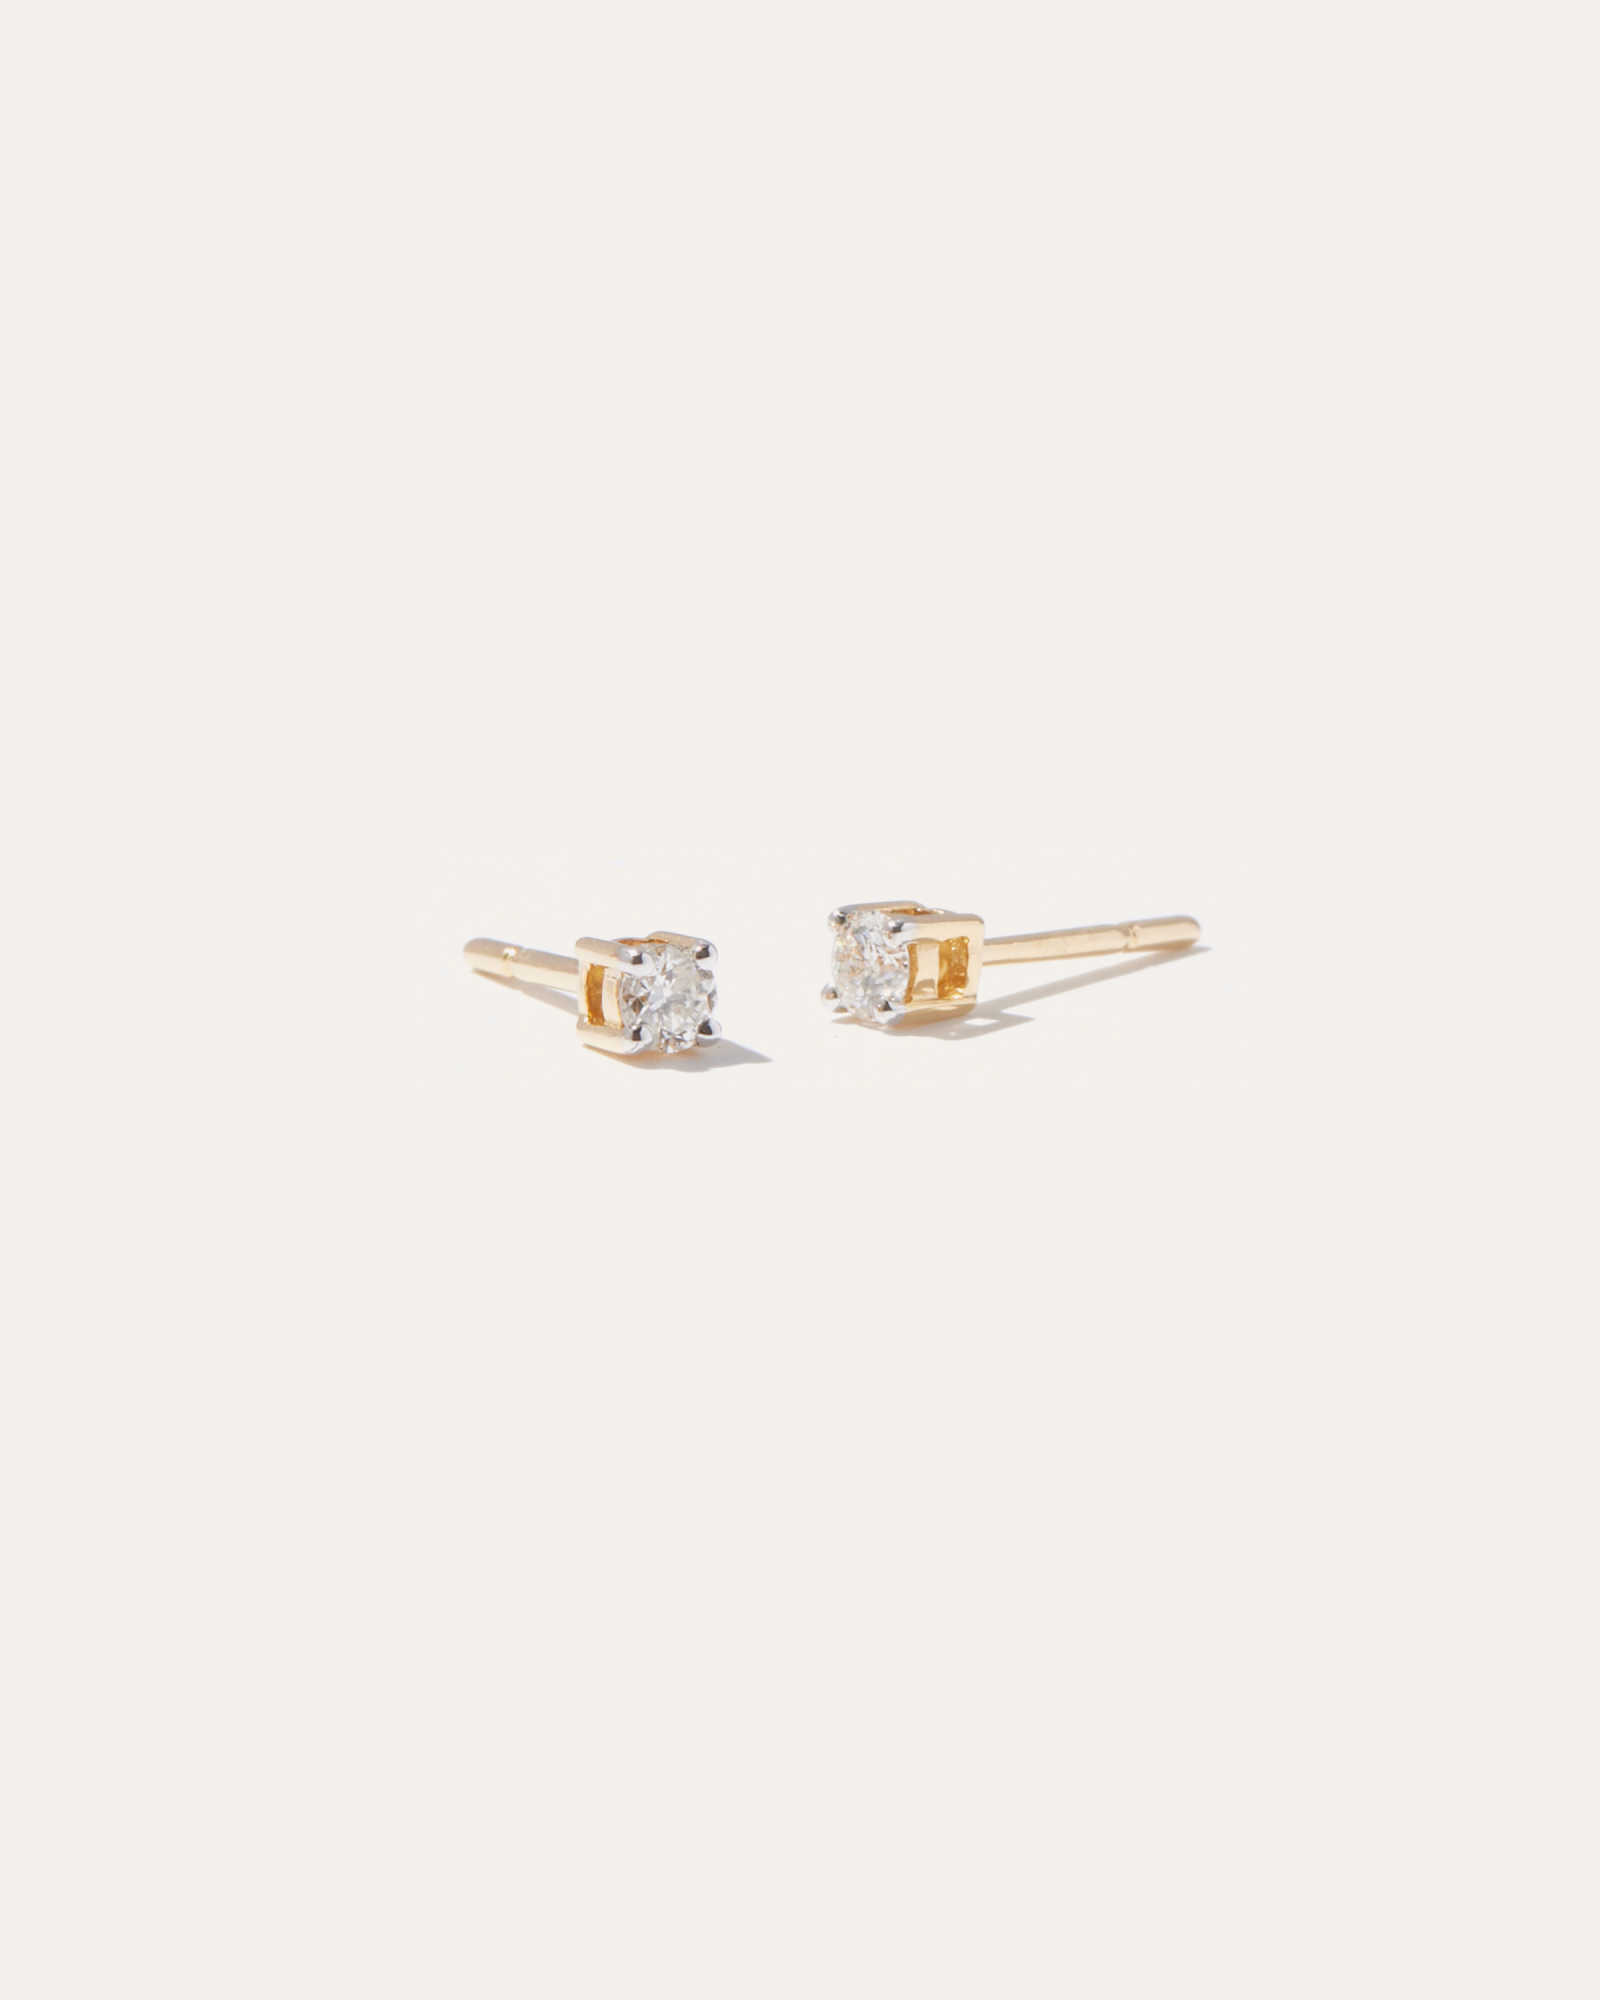 14K Gold Classic Diamond Stud Earrings 0.12 carat